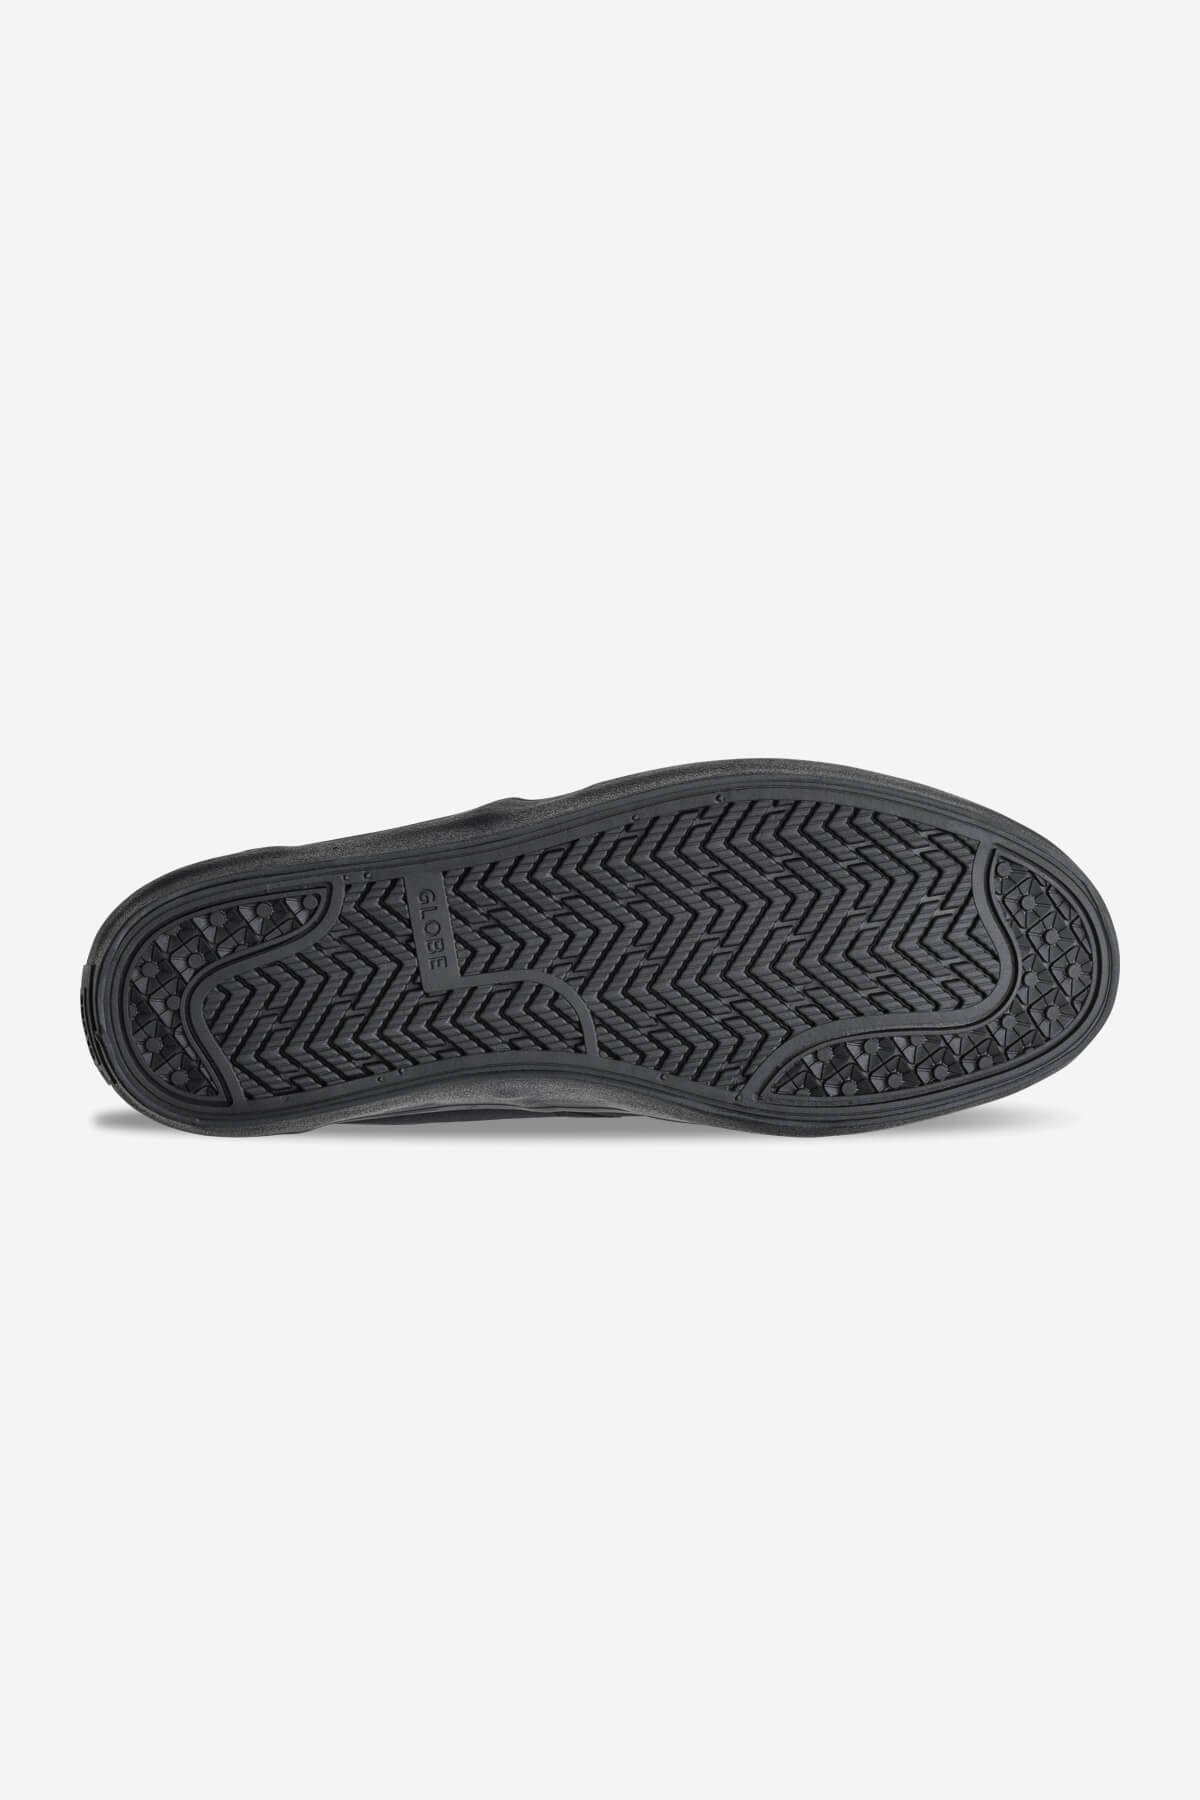 Globe - Motley Ii Strap - Engrasado Black/Black - skateboard Zapatos